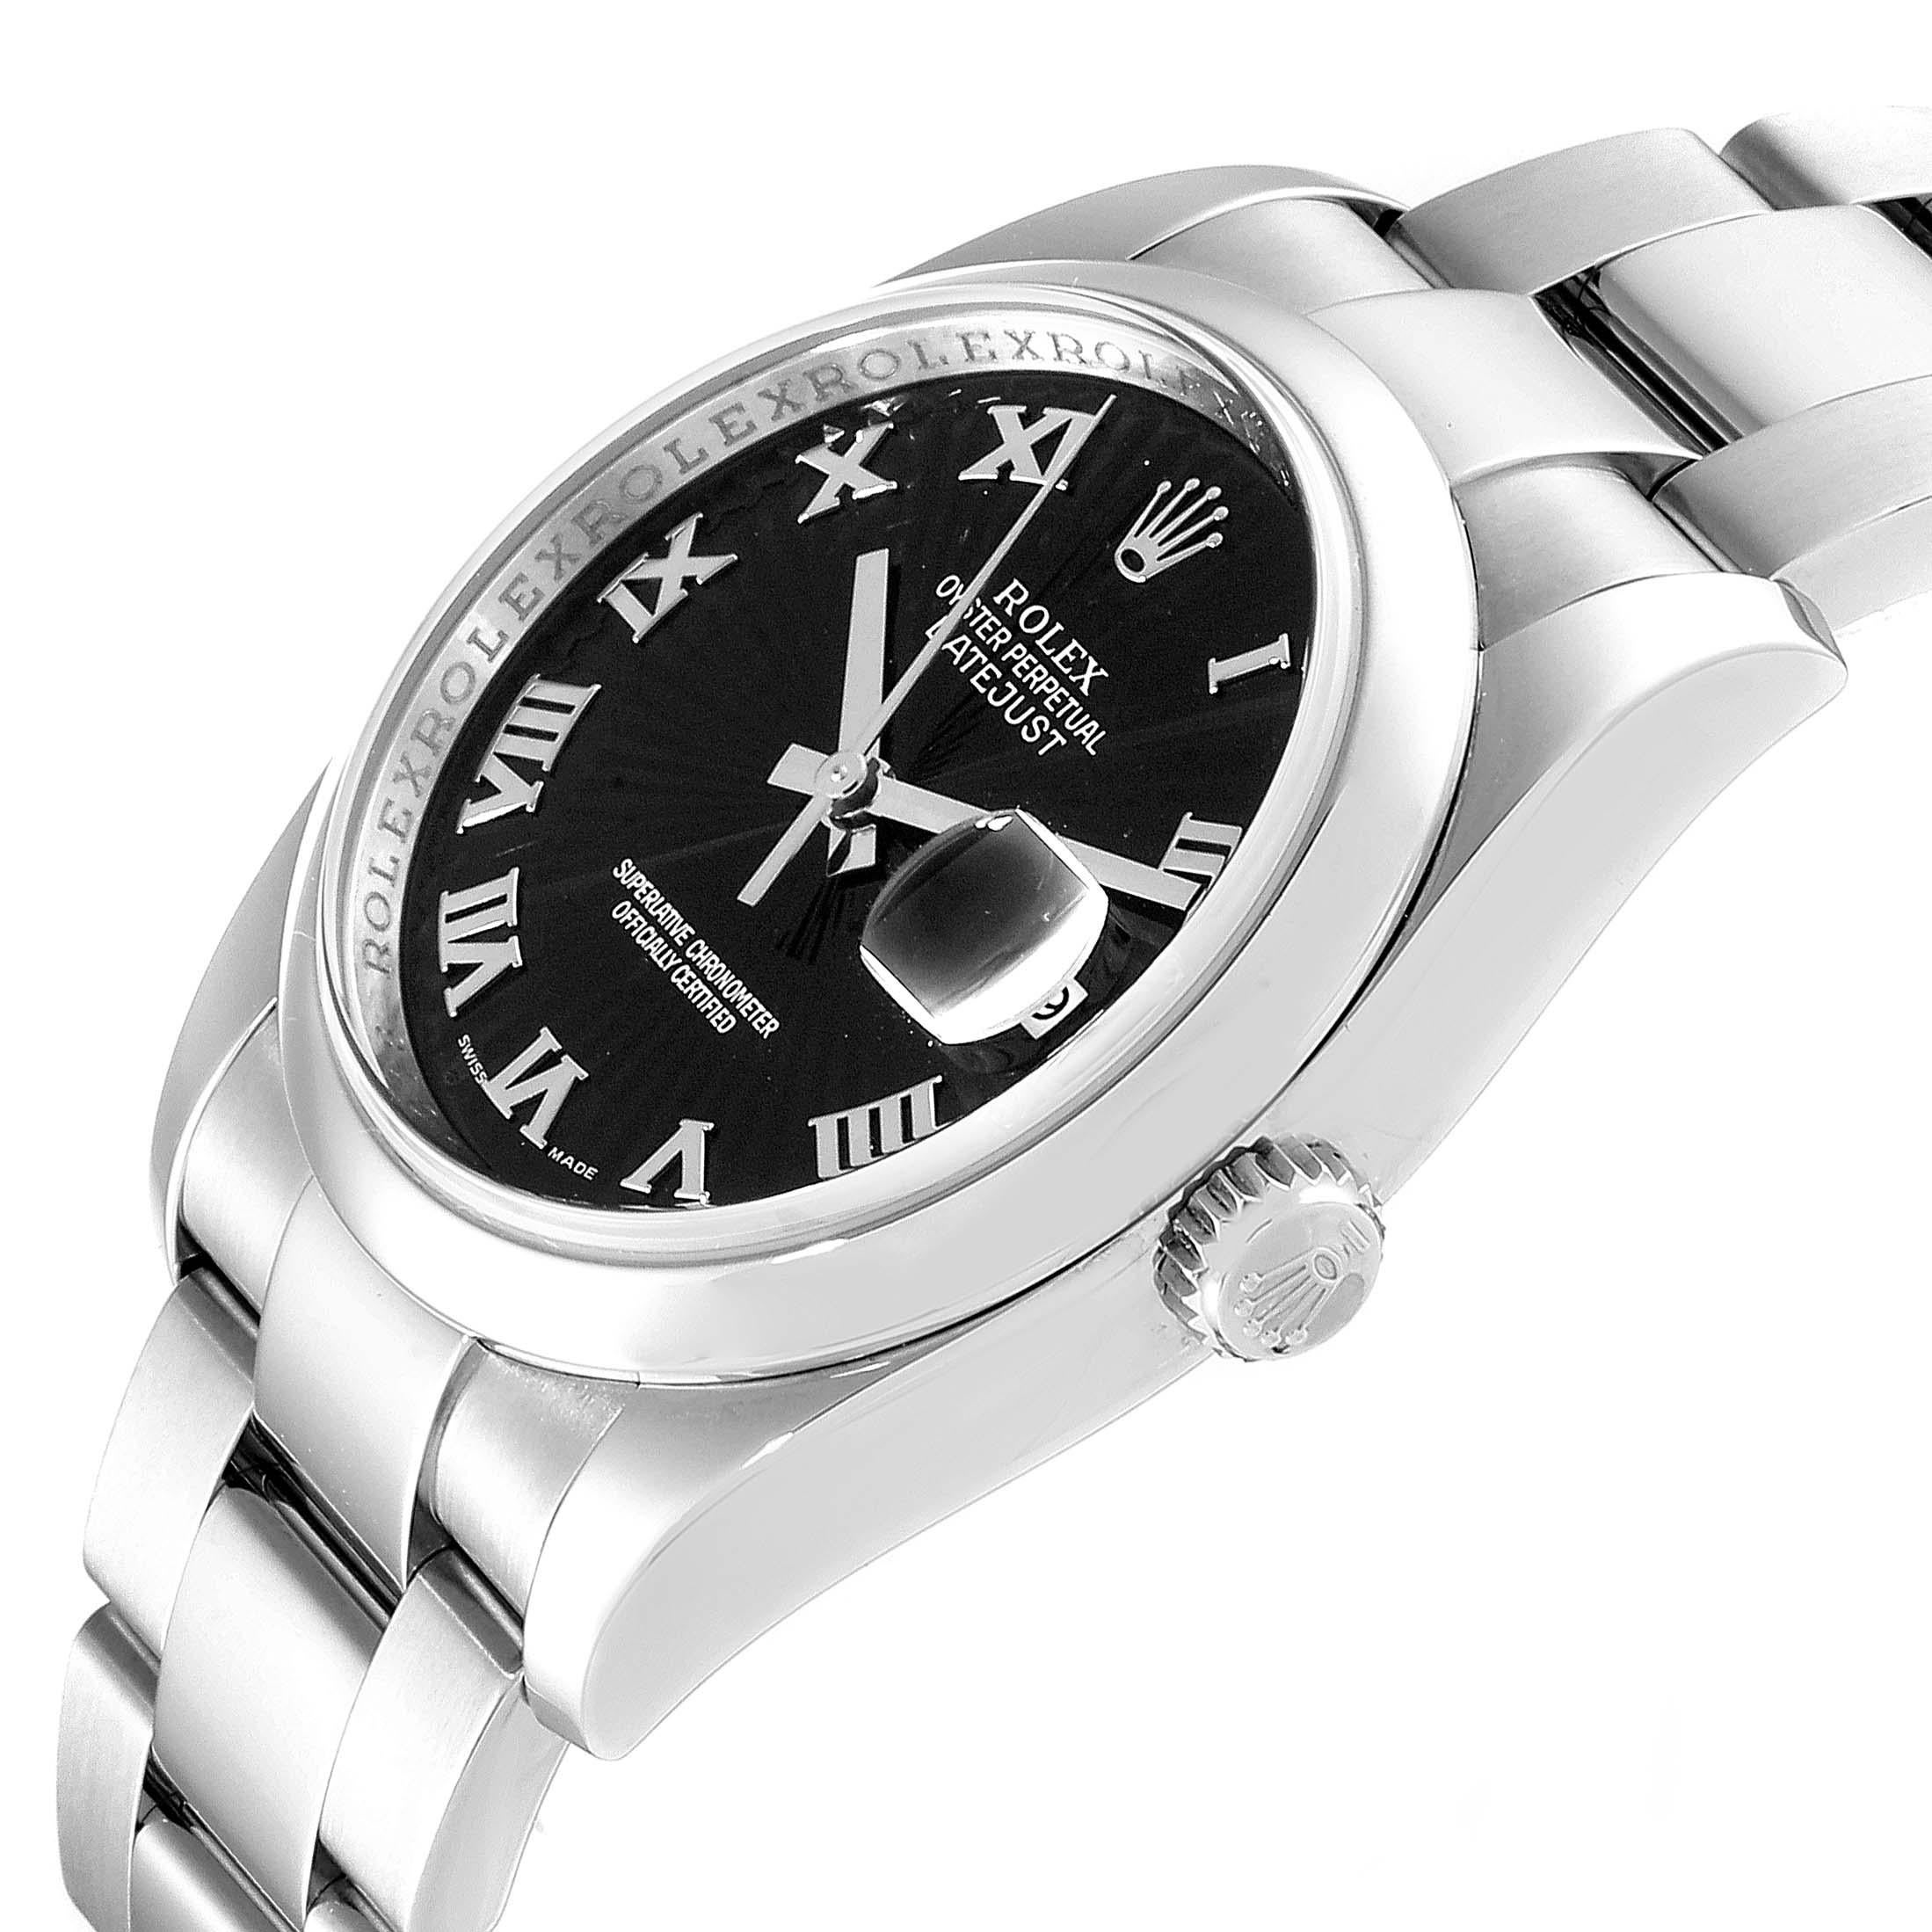 Rolex Datejust Black Sunbeam Dial Oyster Bracelet Steel Men's Watch 116200 2